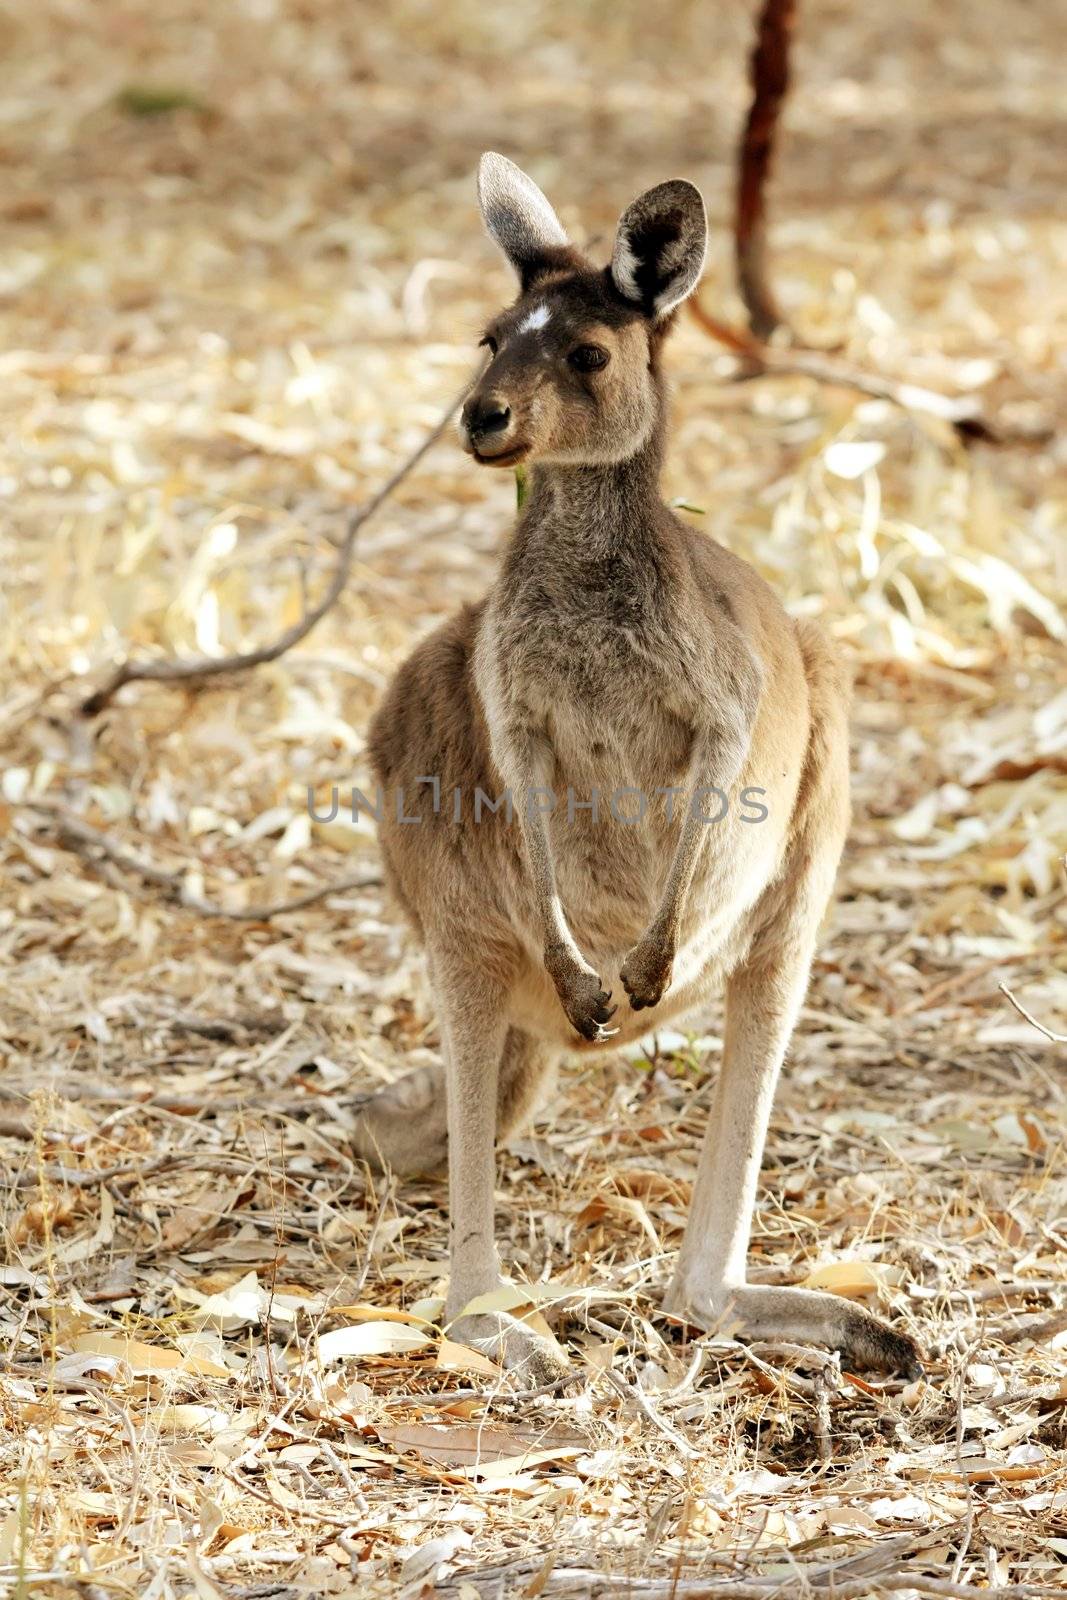 Cute Young Kangaroo by kentoh